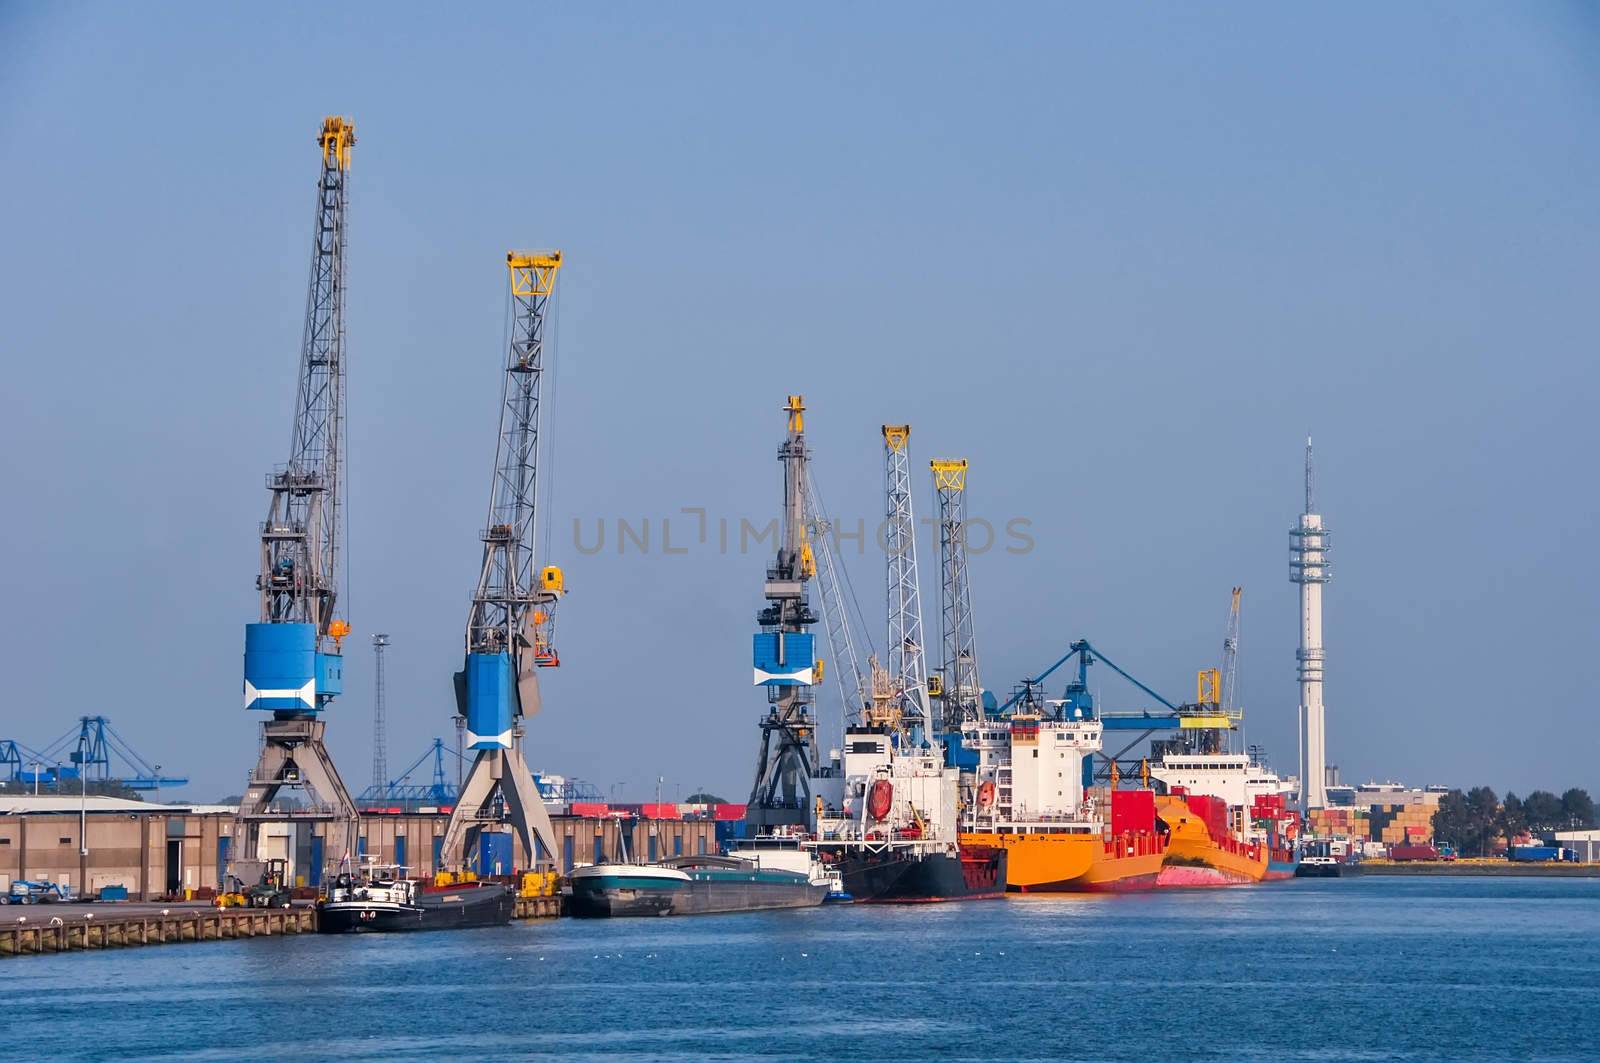 Rotterdam sea cargo port skyline by vlaru